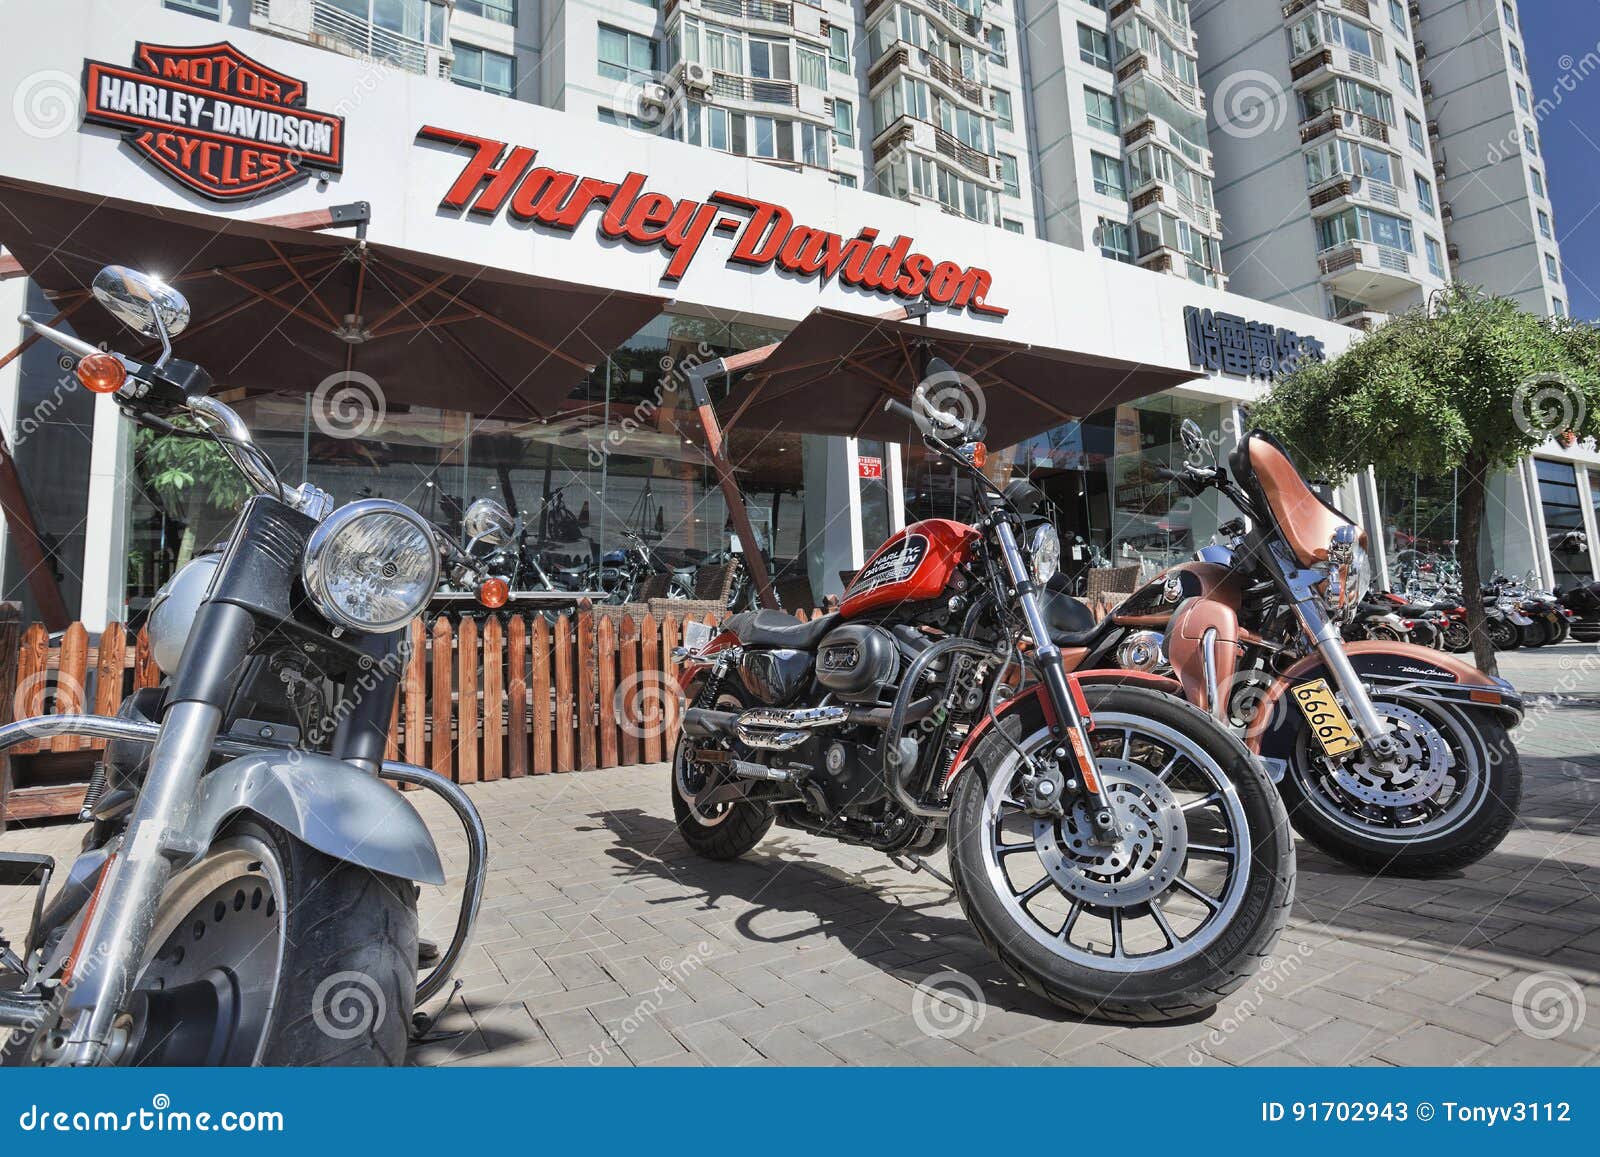 Harley Davidson Shop Beijing China Editorial Stock Photo Image Of Davidson Lifestyle 91702943